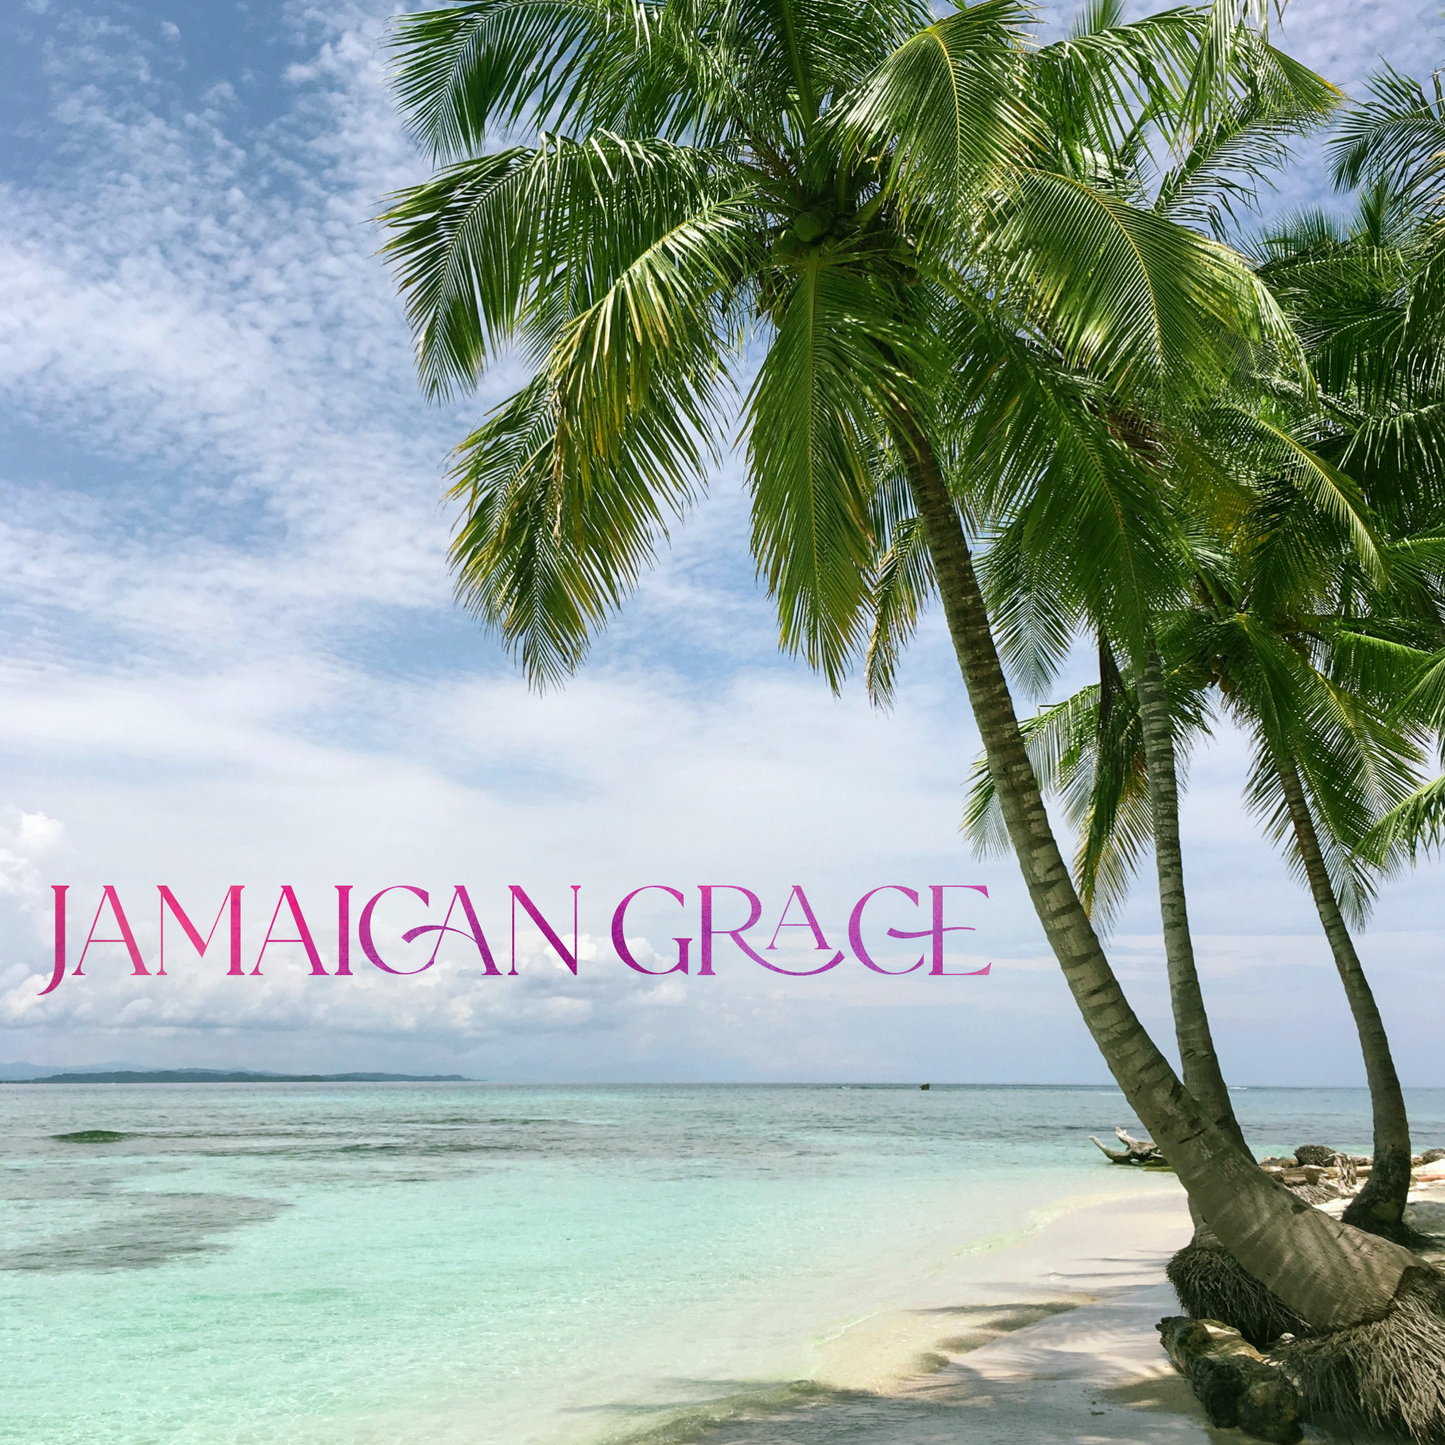 Jamaican Grace